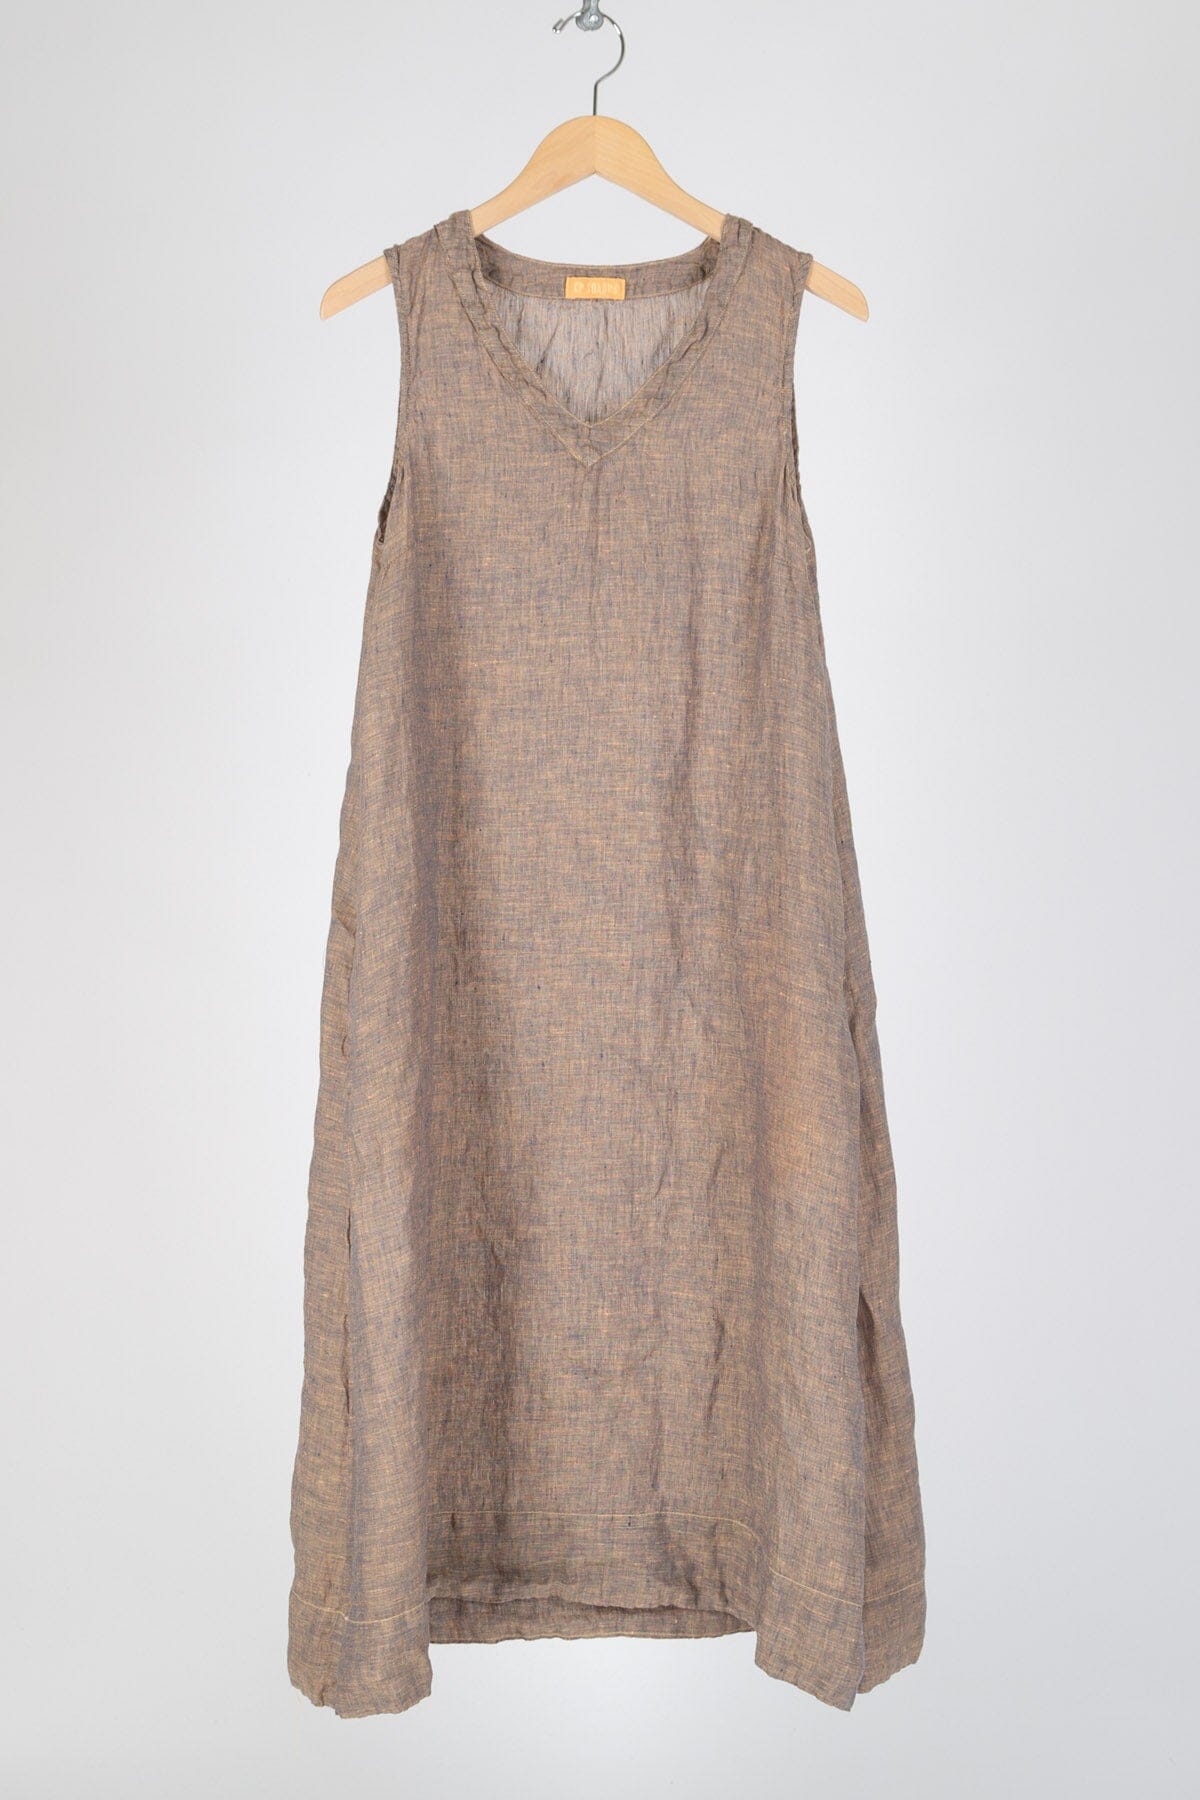 Tasha - Iridescent Linen S90 - Iridescent Sale Dresses/Skirts CP Shades satsuma 162